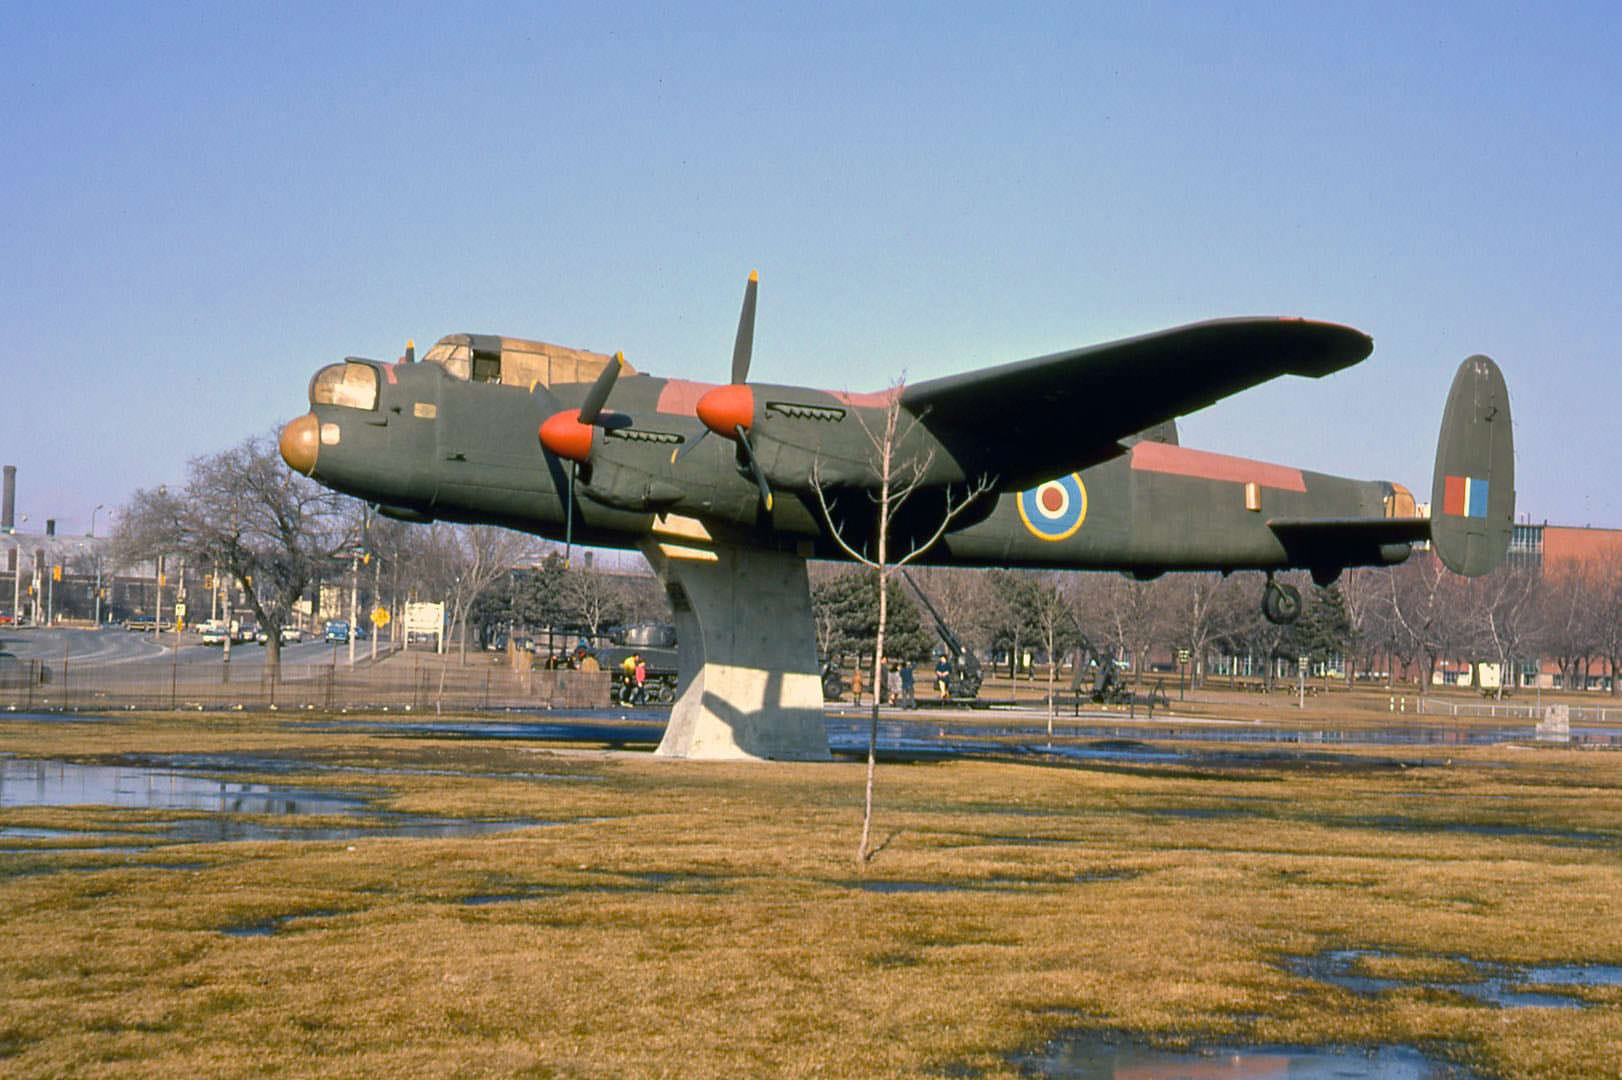 Lancaster Bomber on display at Coronation Park, Lake Shore Blvd. W.,1970